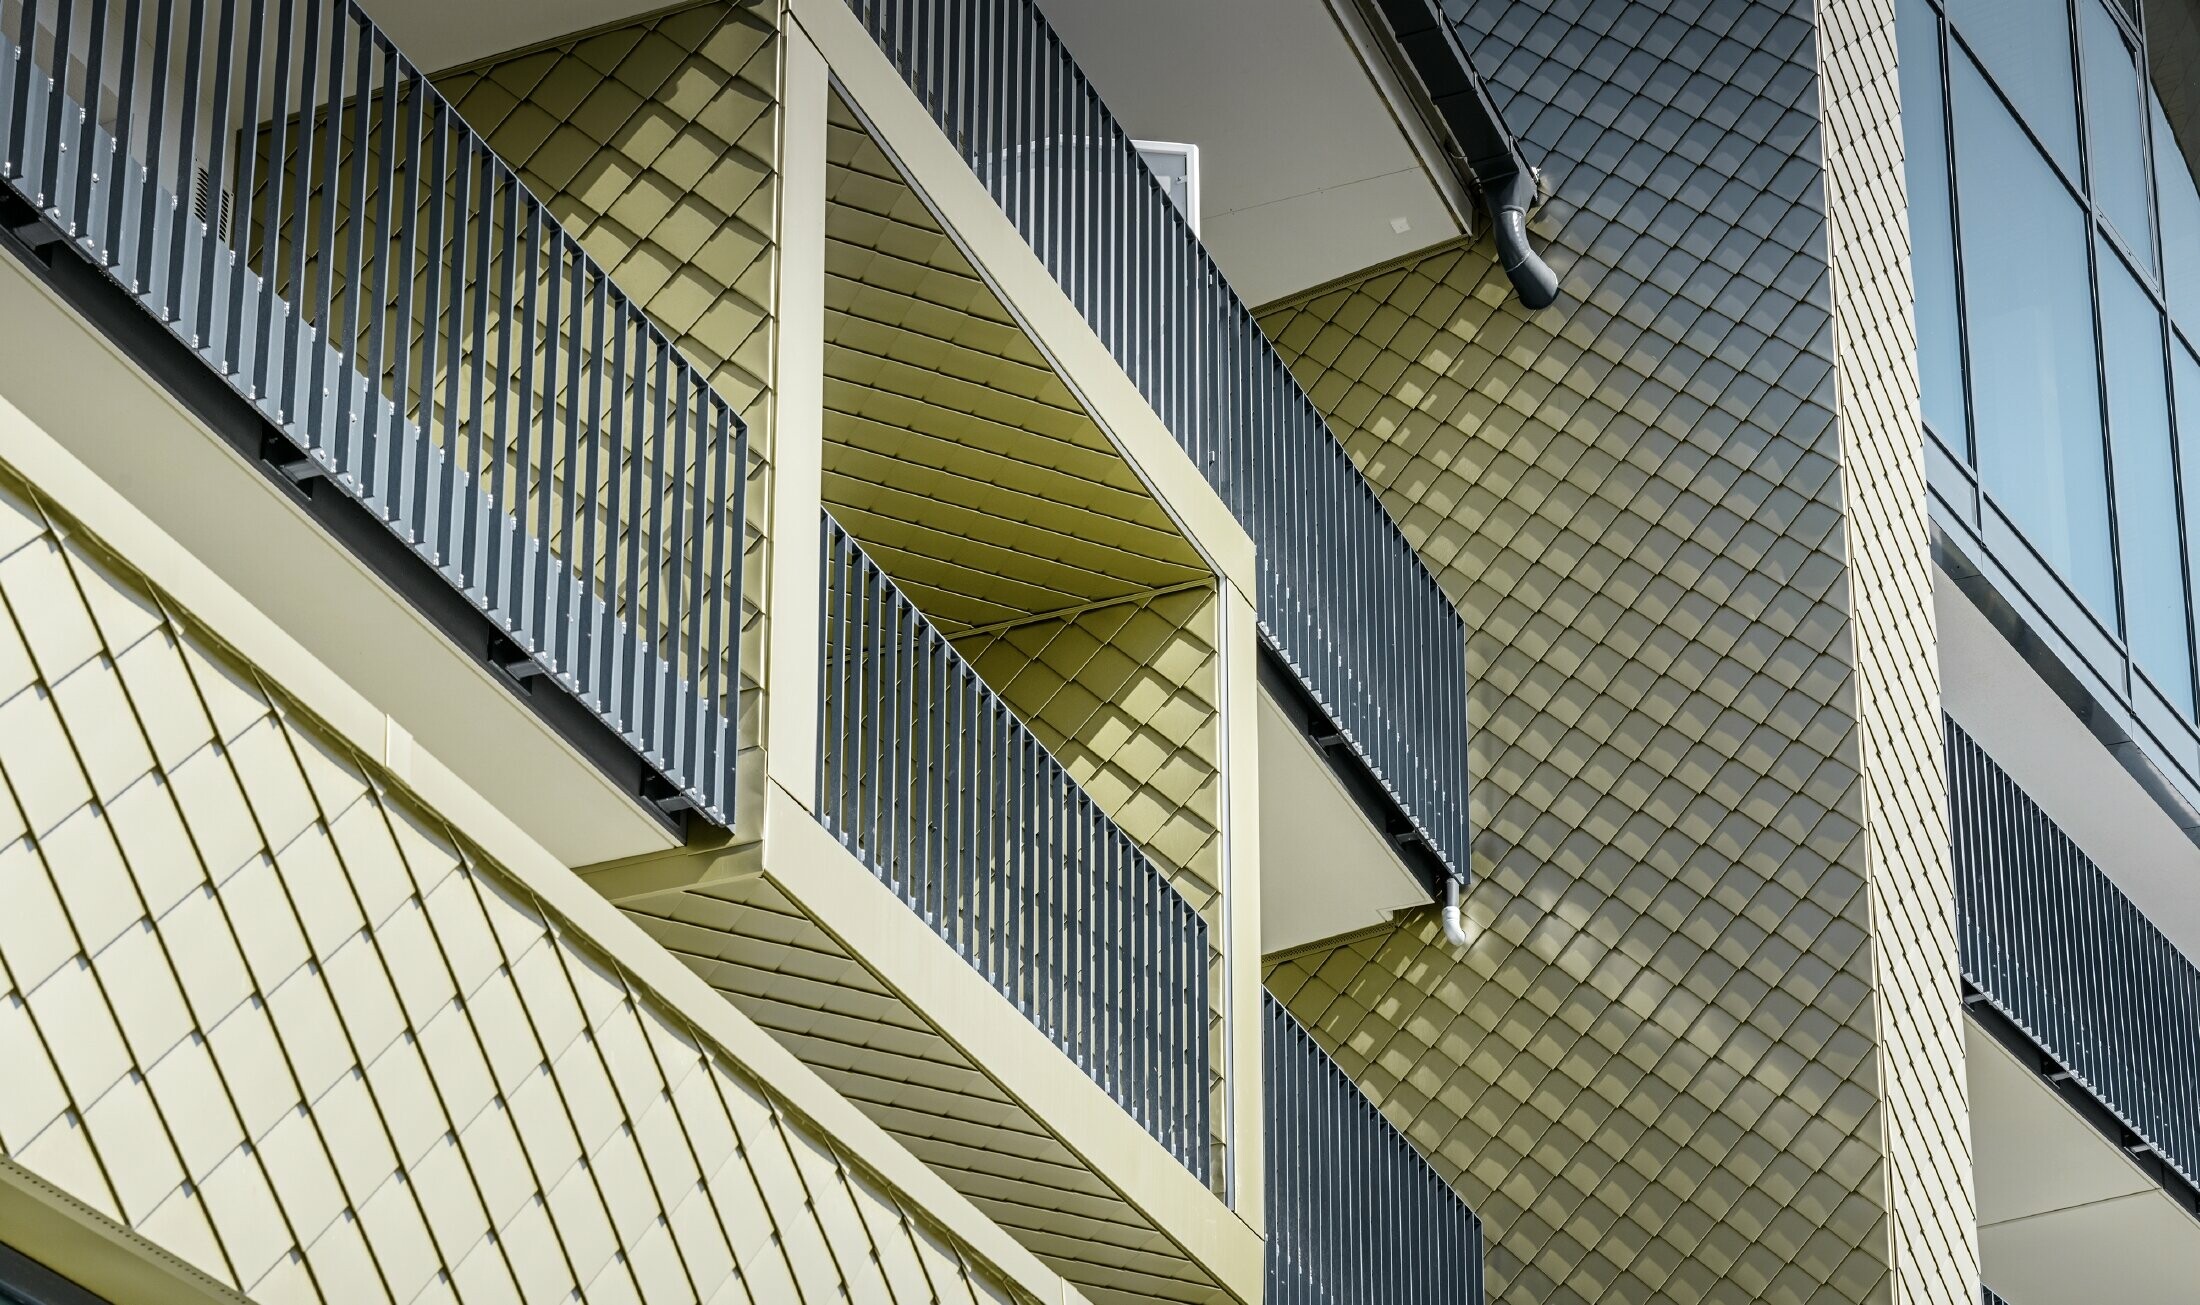 Cladding of the balcony surrounds at Hotel Edita in Scheidegg with the PREFA 20 x 20 rhomboid façade tile in light bronze